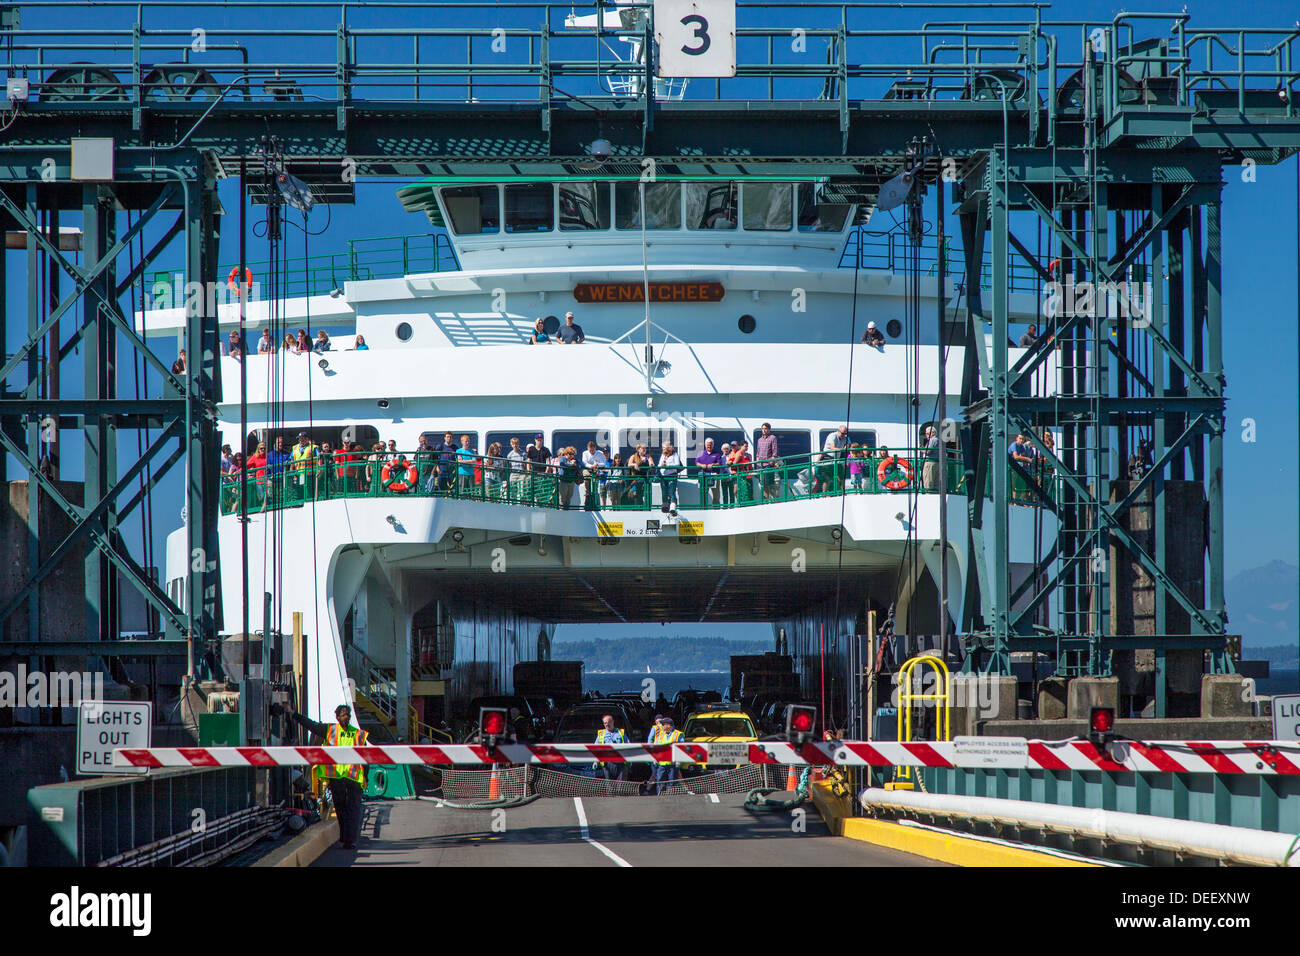 Bainbridge Island Ferry Boat arrivando al Dock di Seattle Seattle, Washington, Stati Uniti d'America Foto Stock